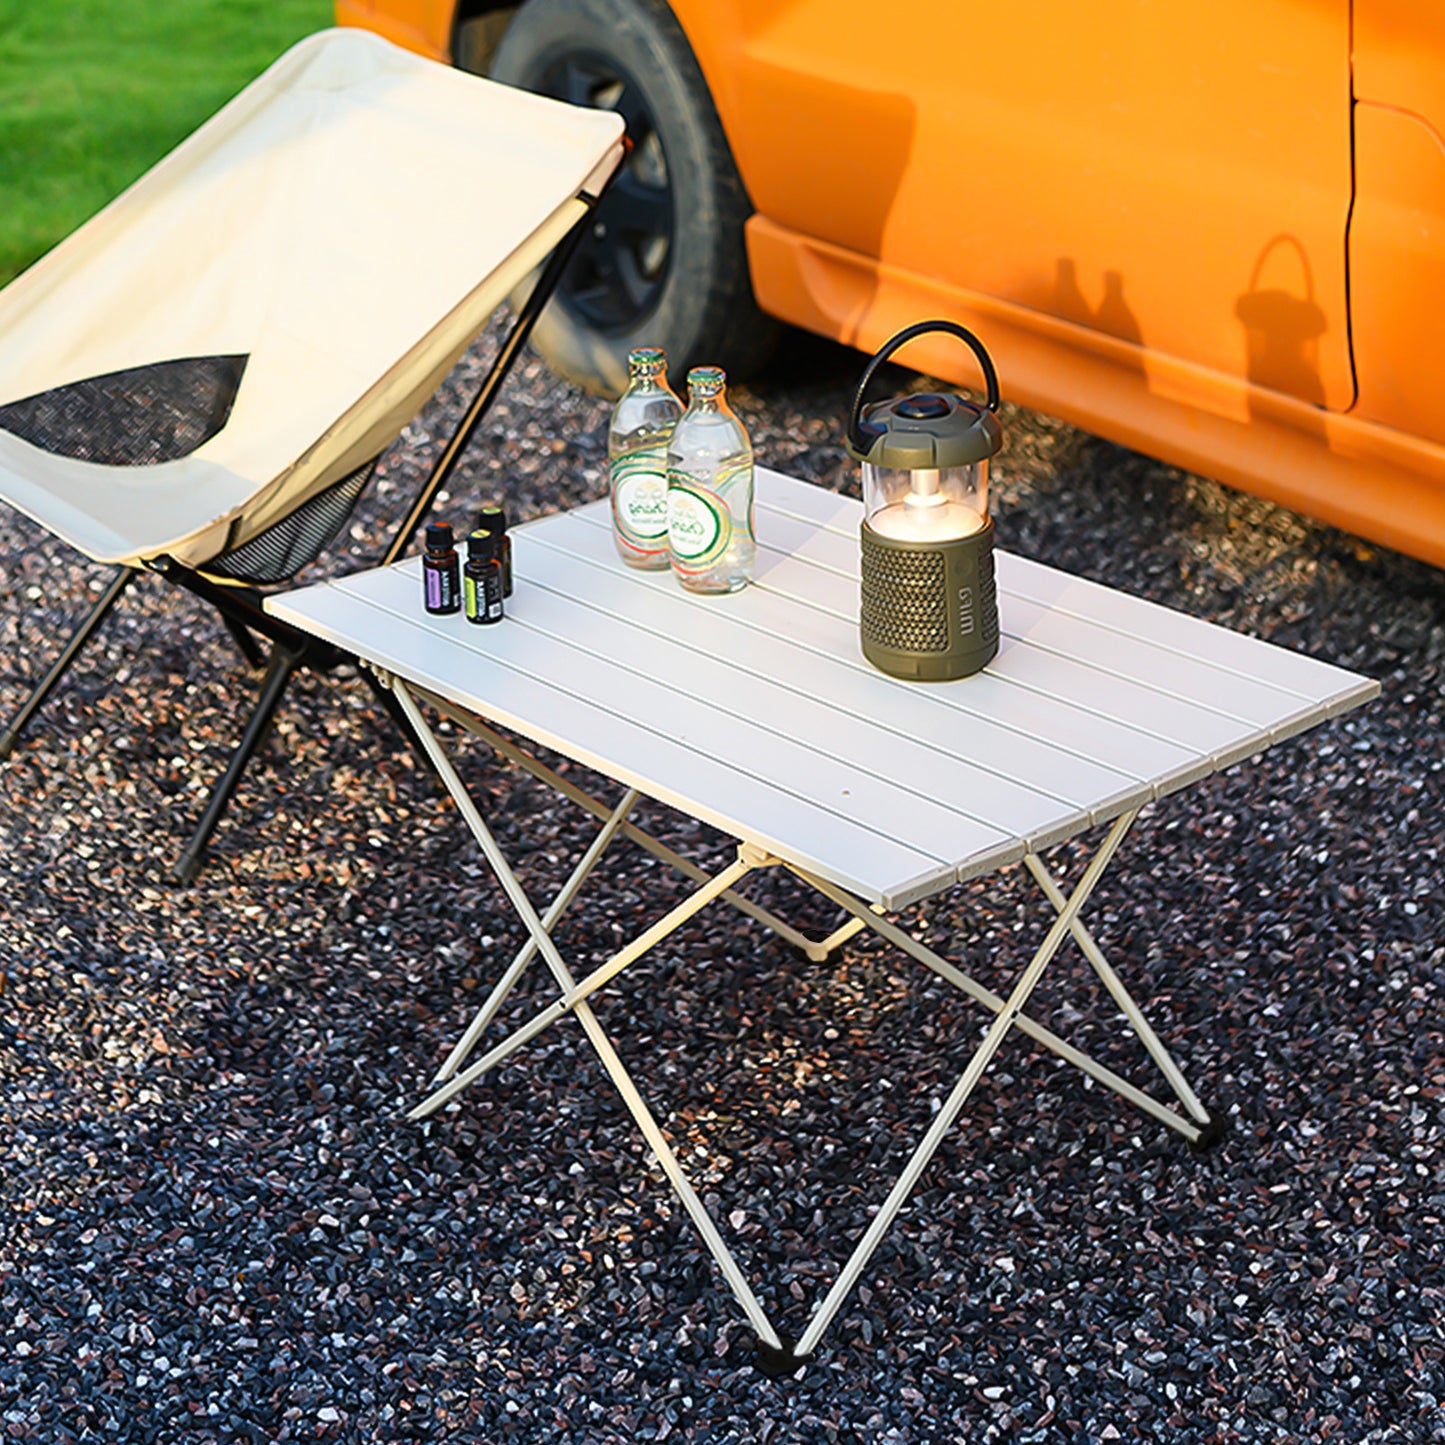 Folding Ultralight Camping Table 26.5"x18.5"x16"